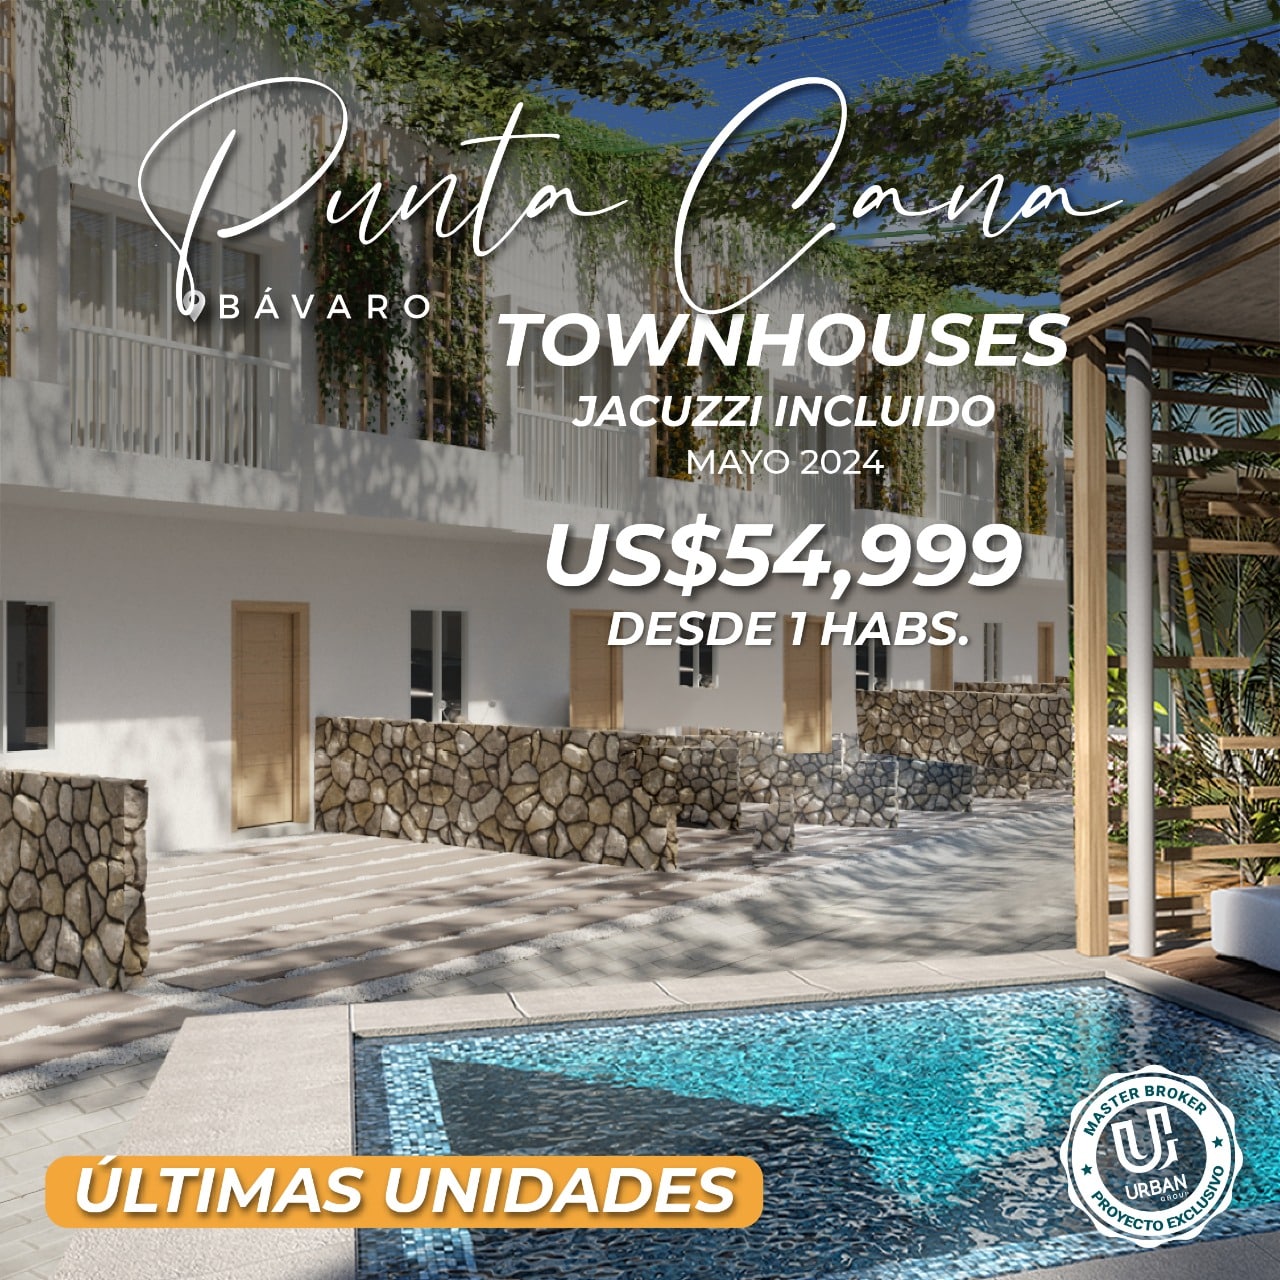 Precios unicos Townhouses en Punta Cana